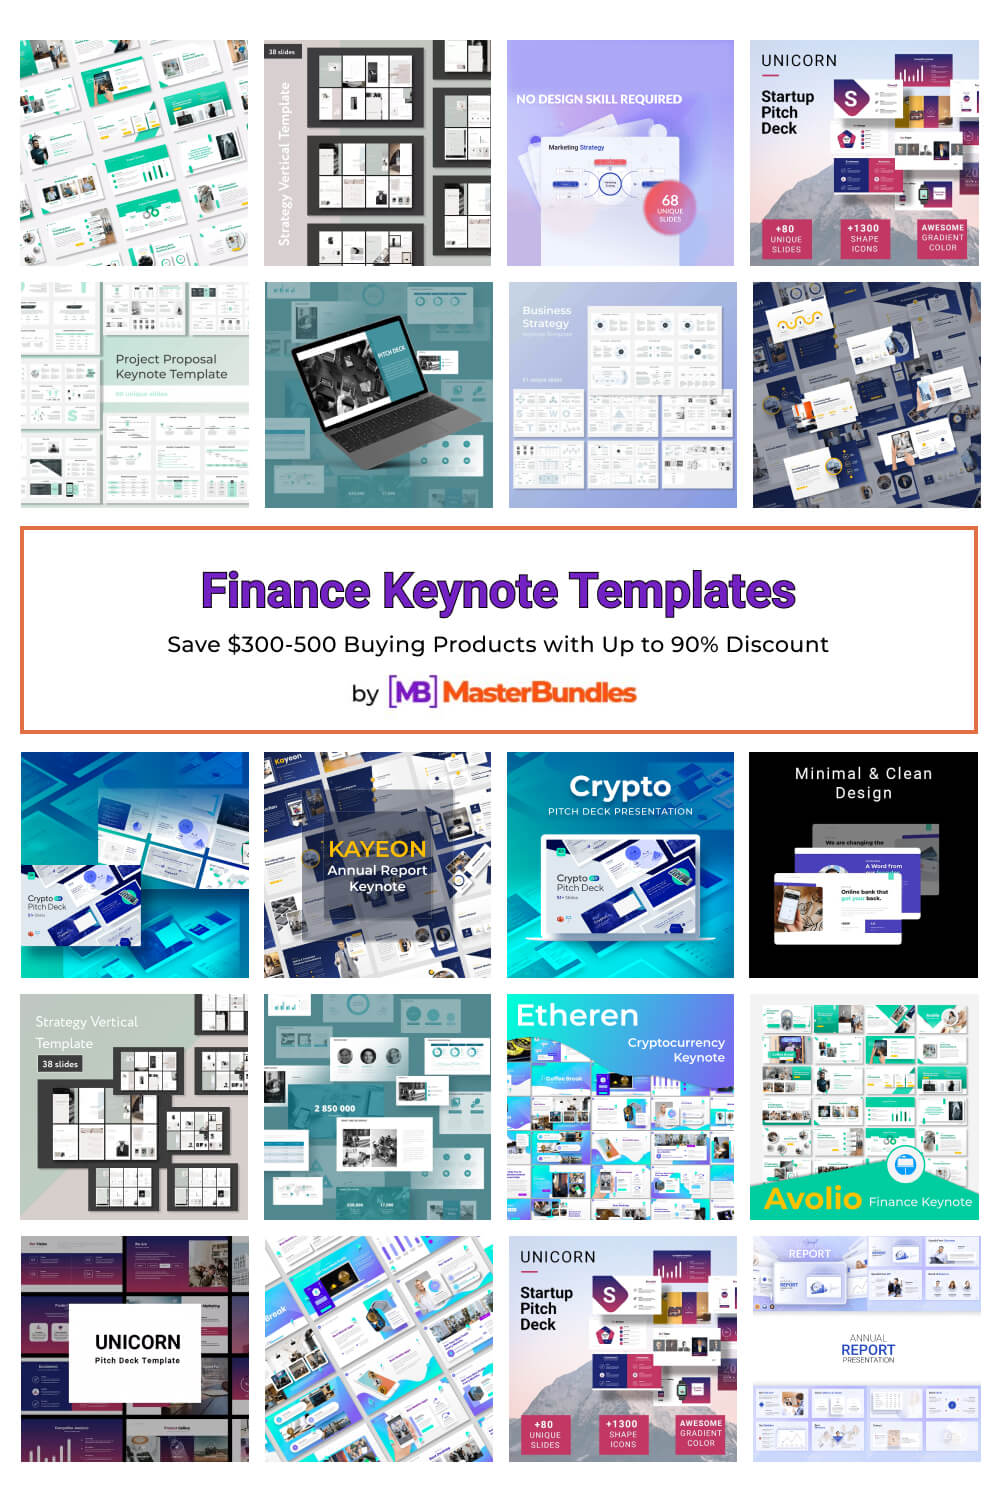 finance keynote templates pinterest image.